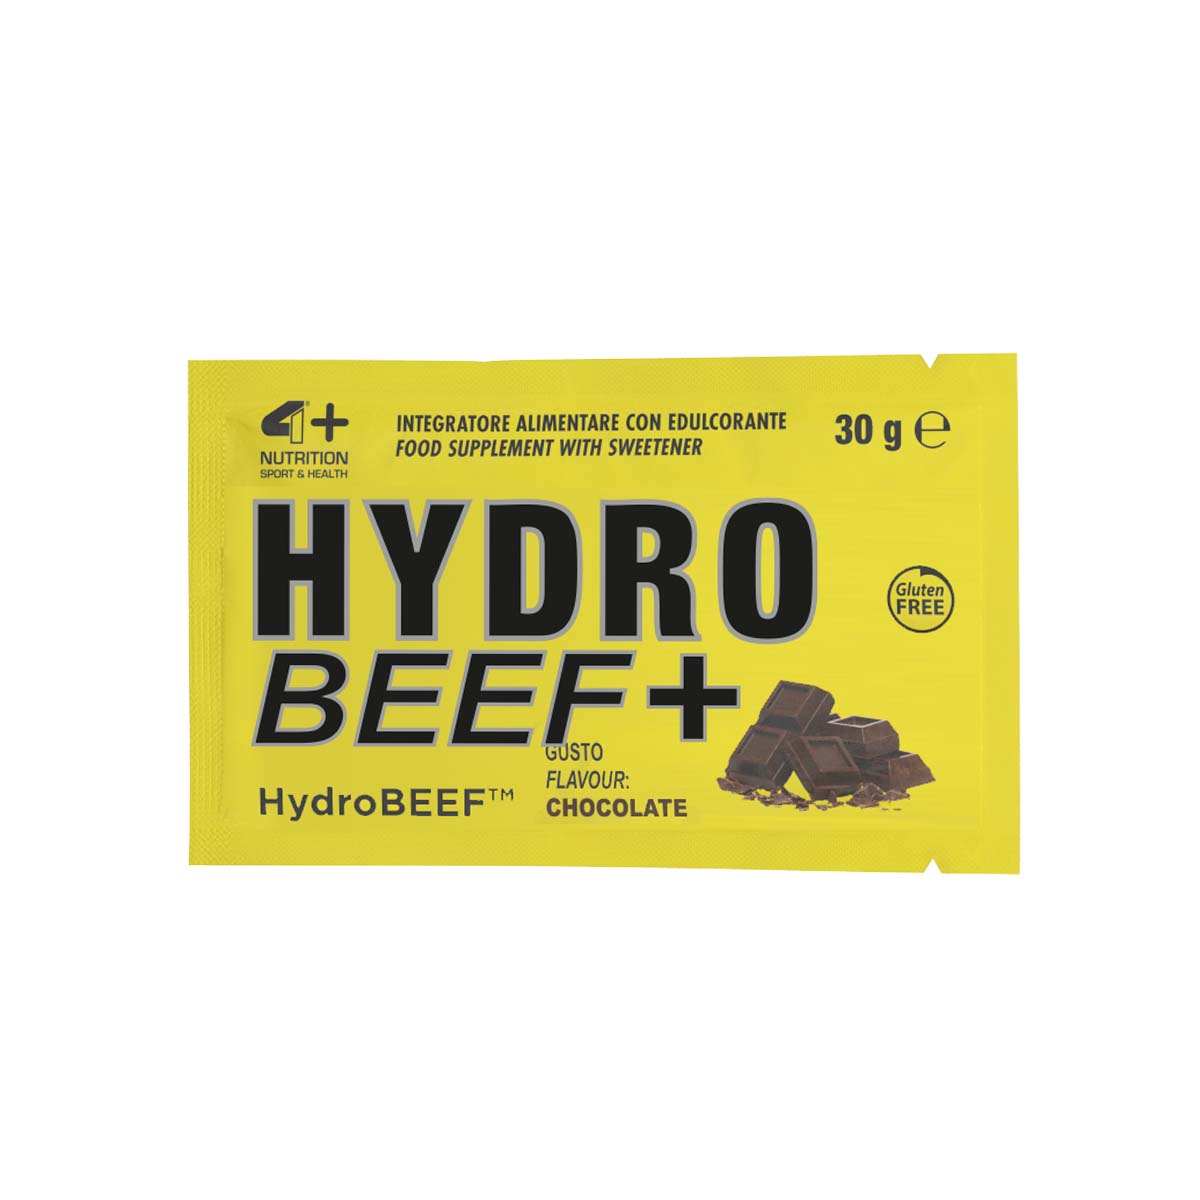 HYDRO BEEF+-30 g-Cocoa